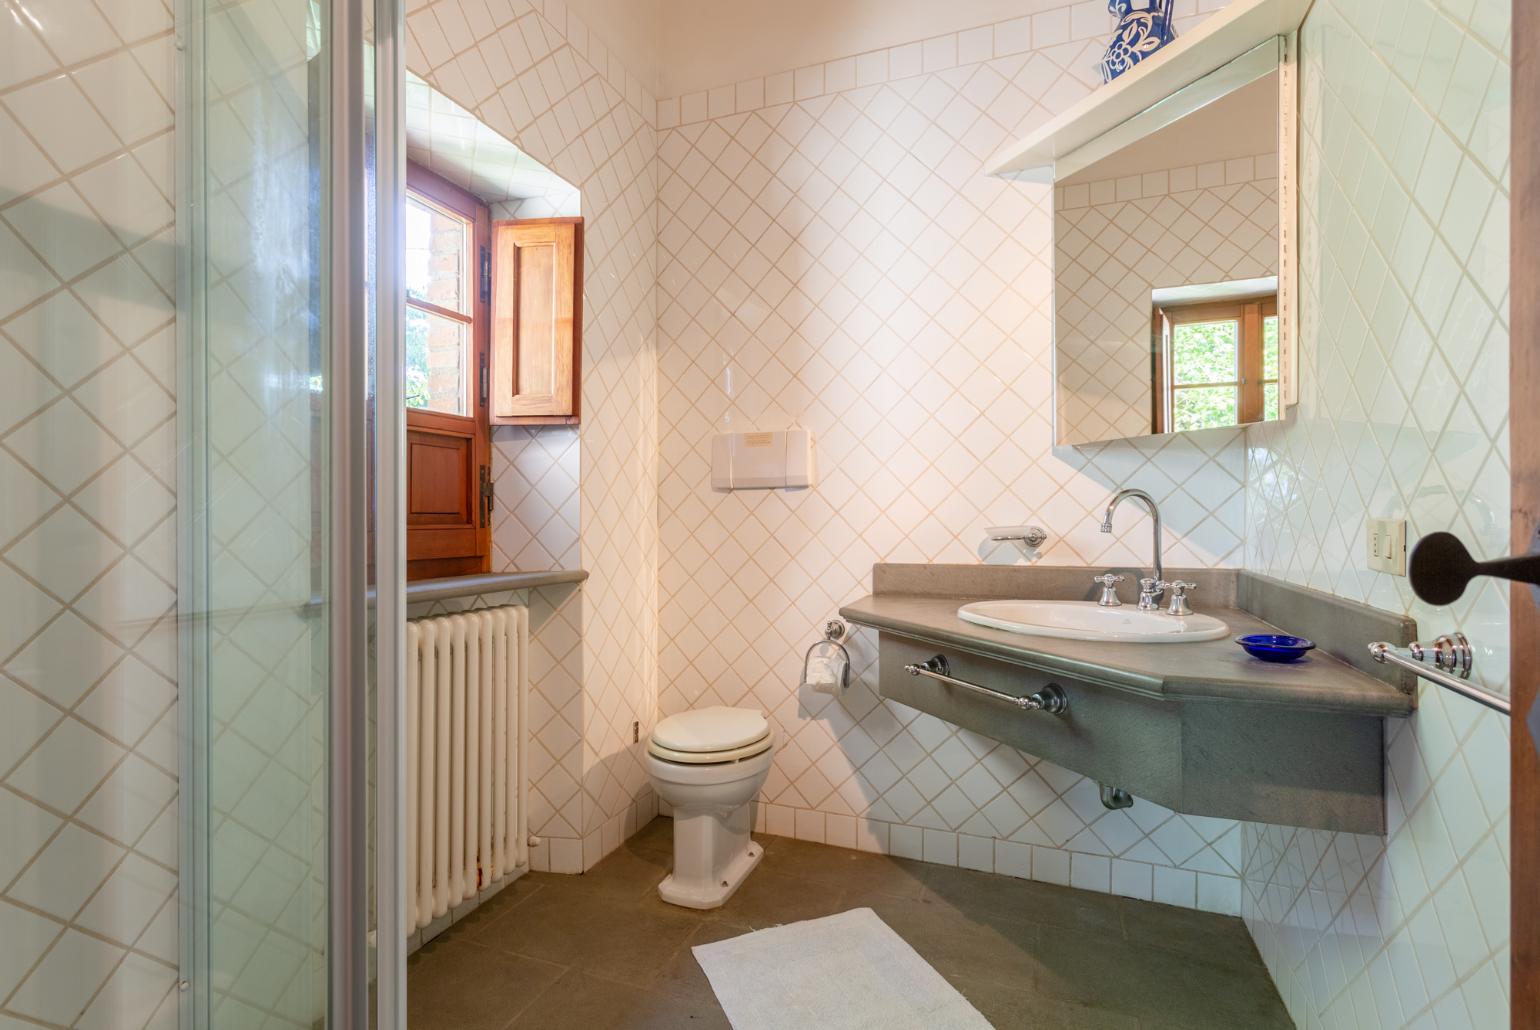 En suite bathroom in annex with shower